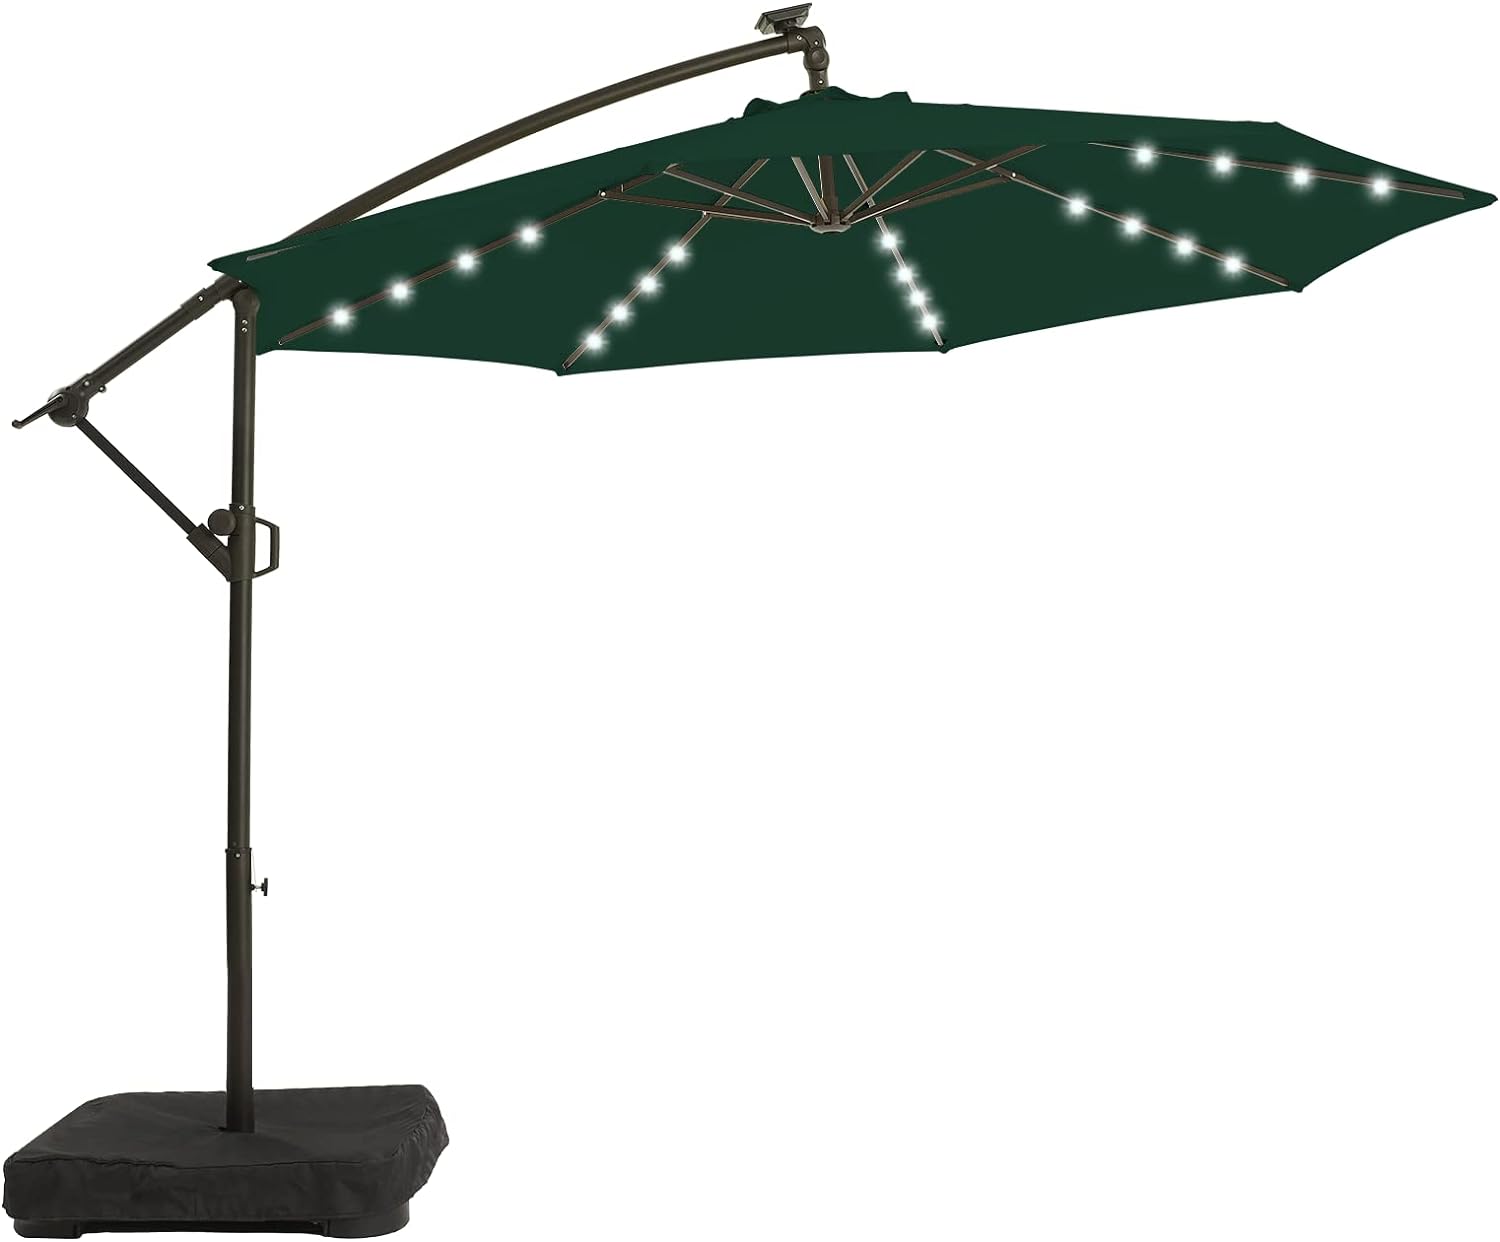 Outdoor Umbrella Cafe Umbrella Market Umbrella With Light and Waterbase